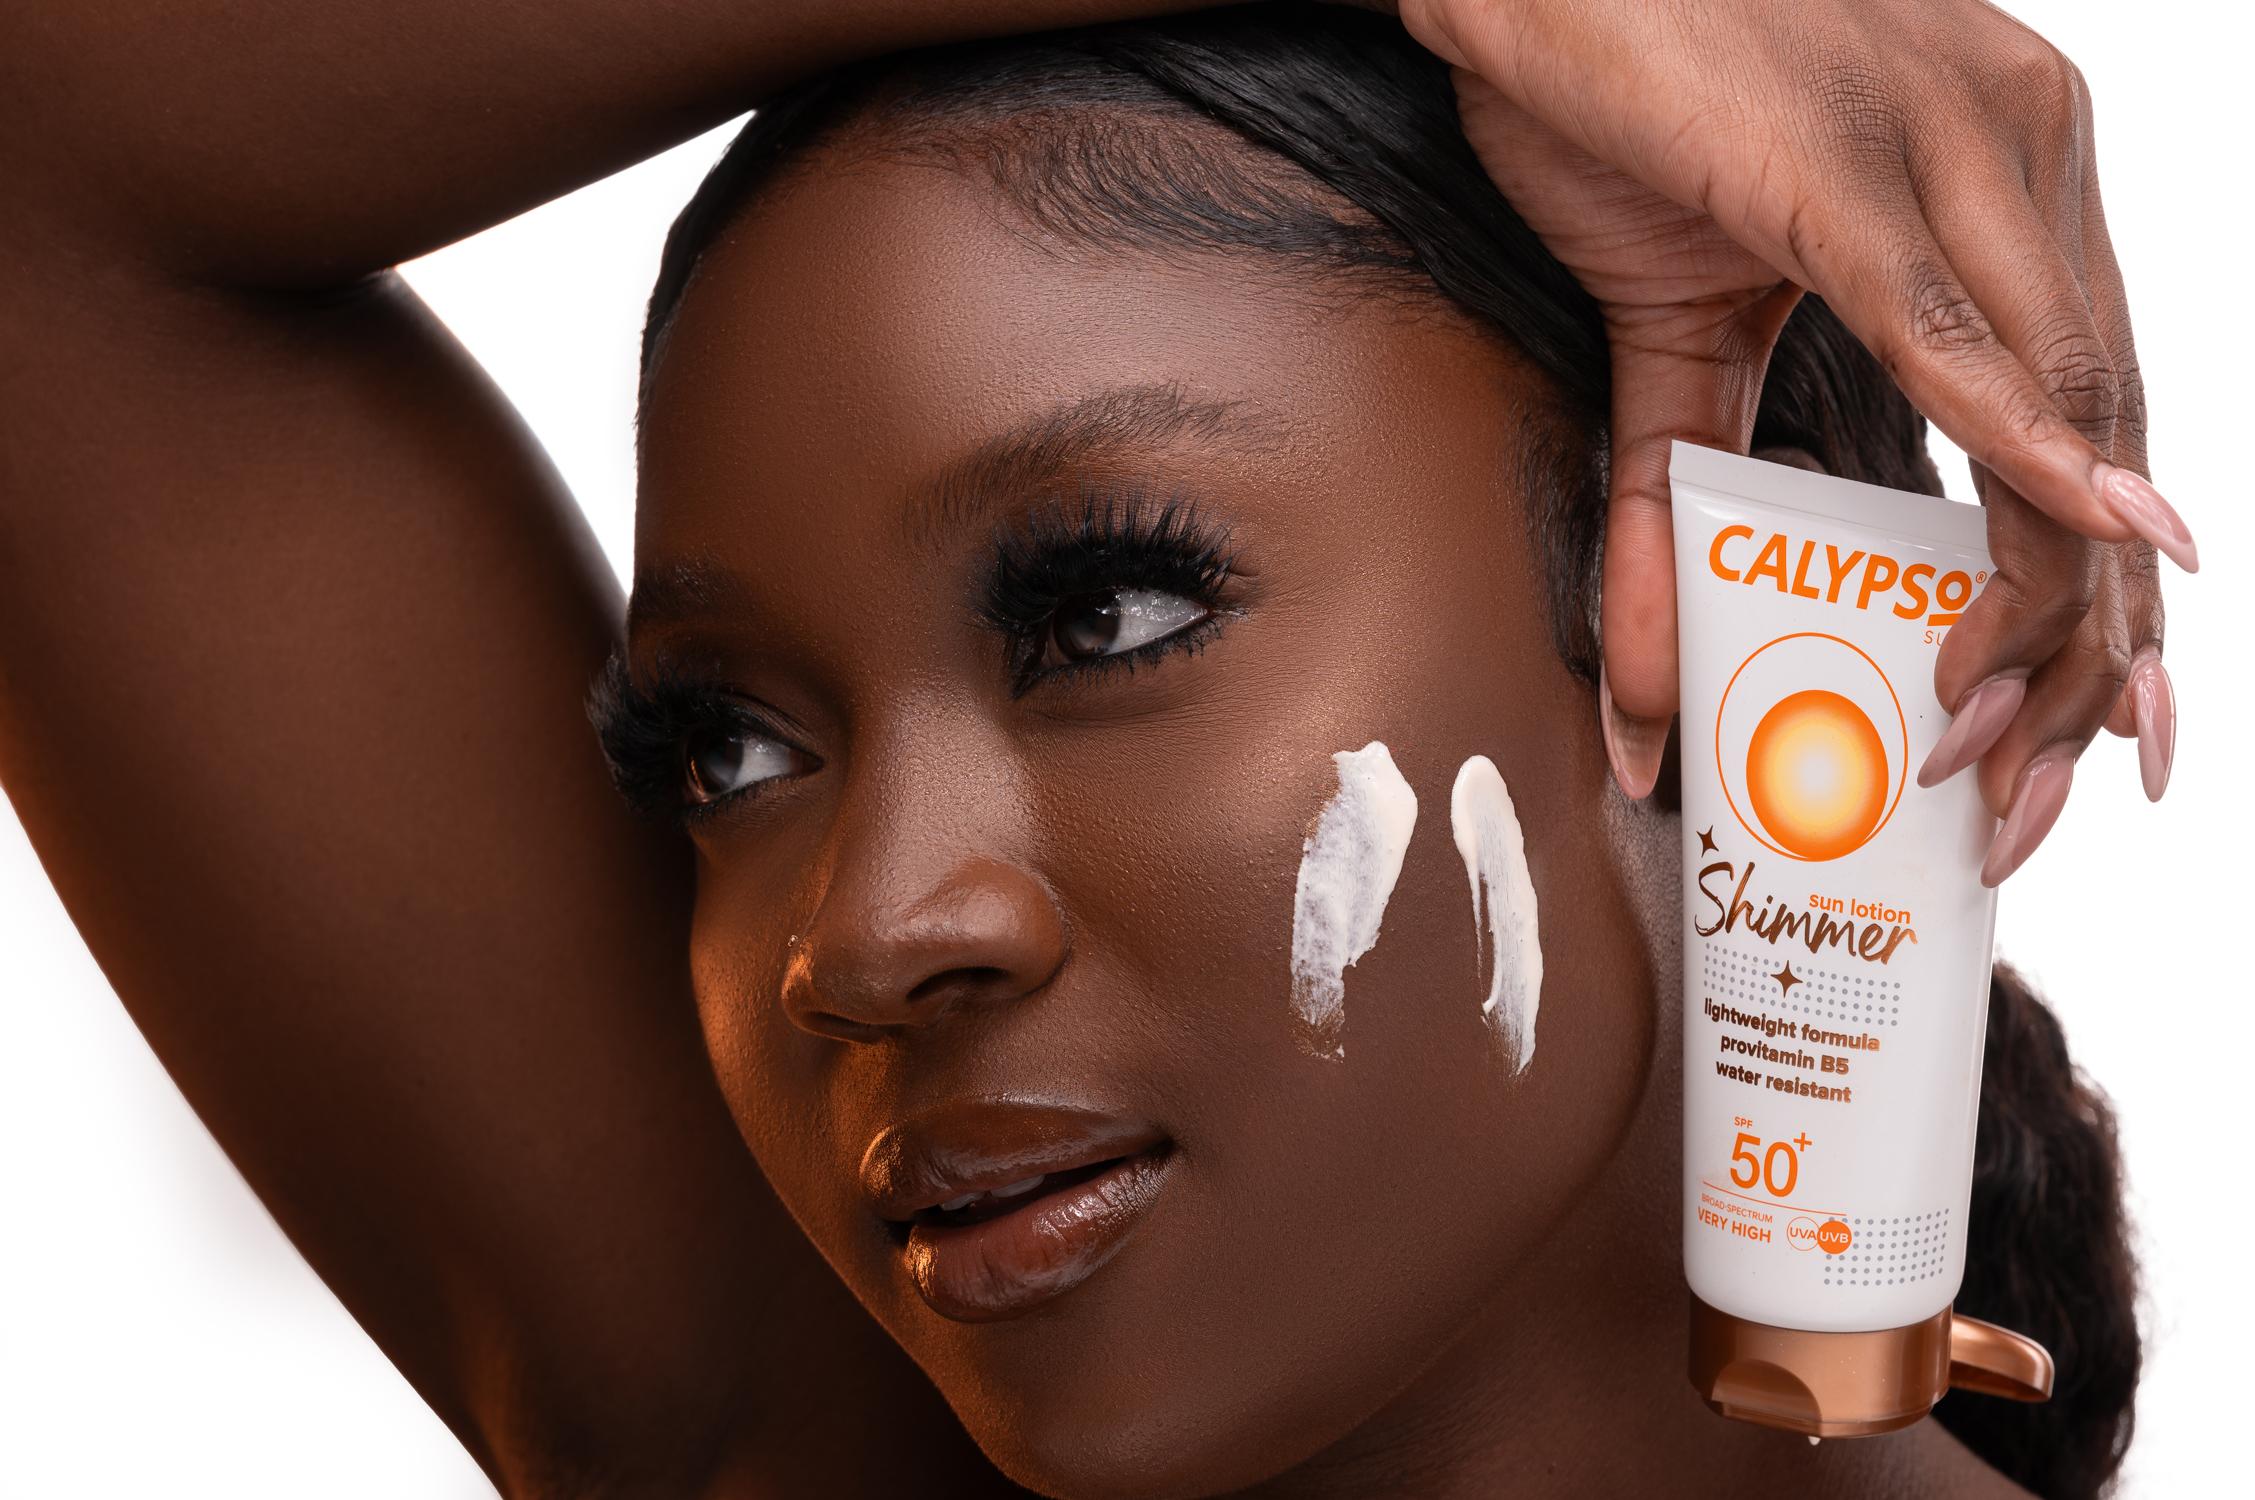 Calypso Shimmer Sun Lotion SPF50 Lifestyle face